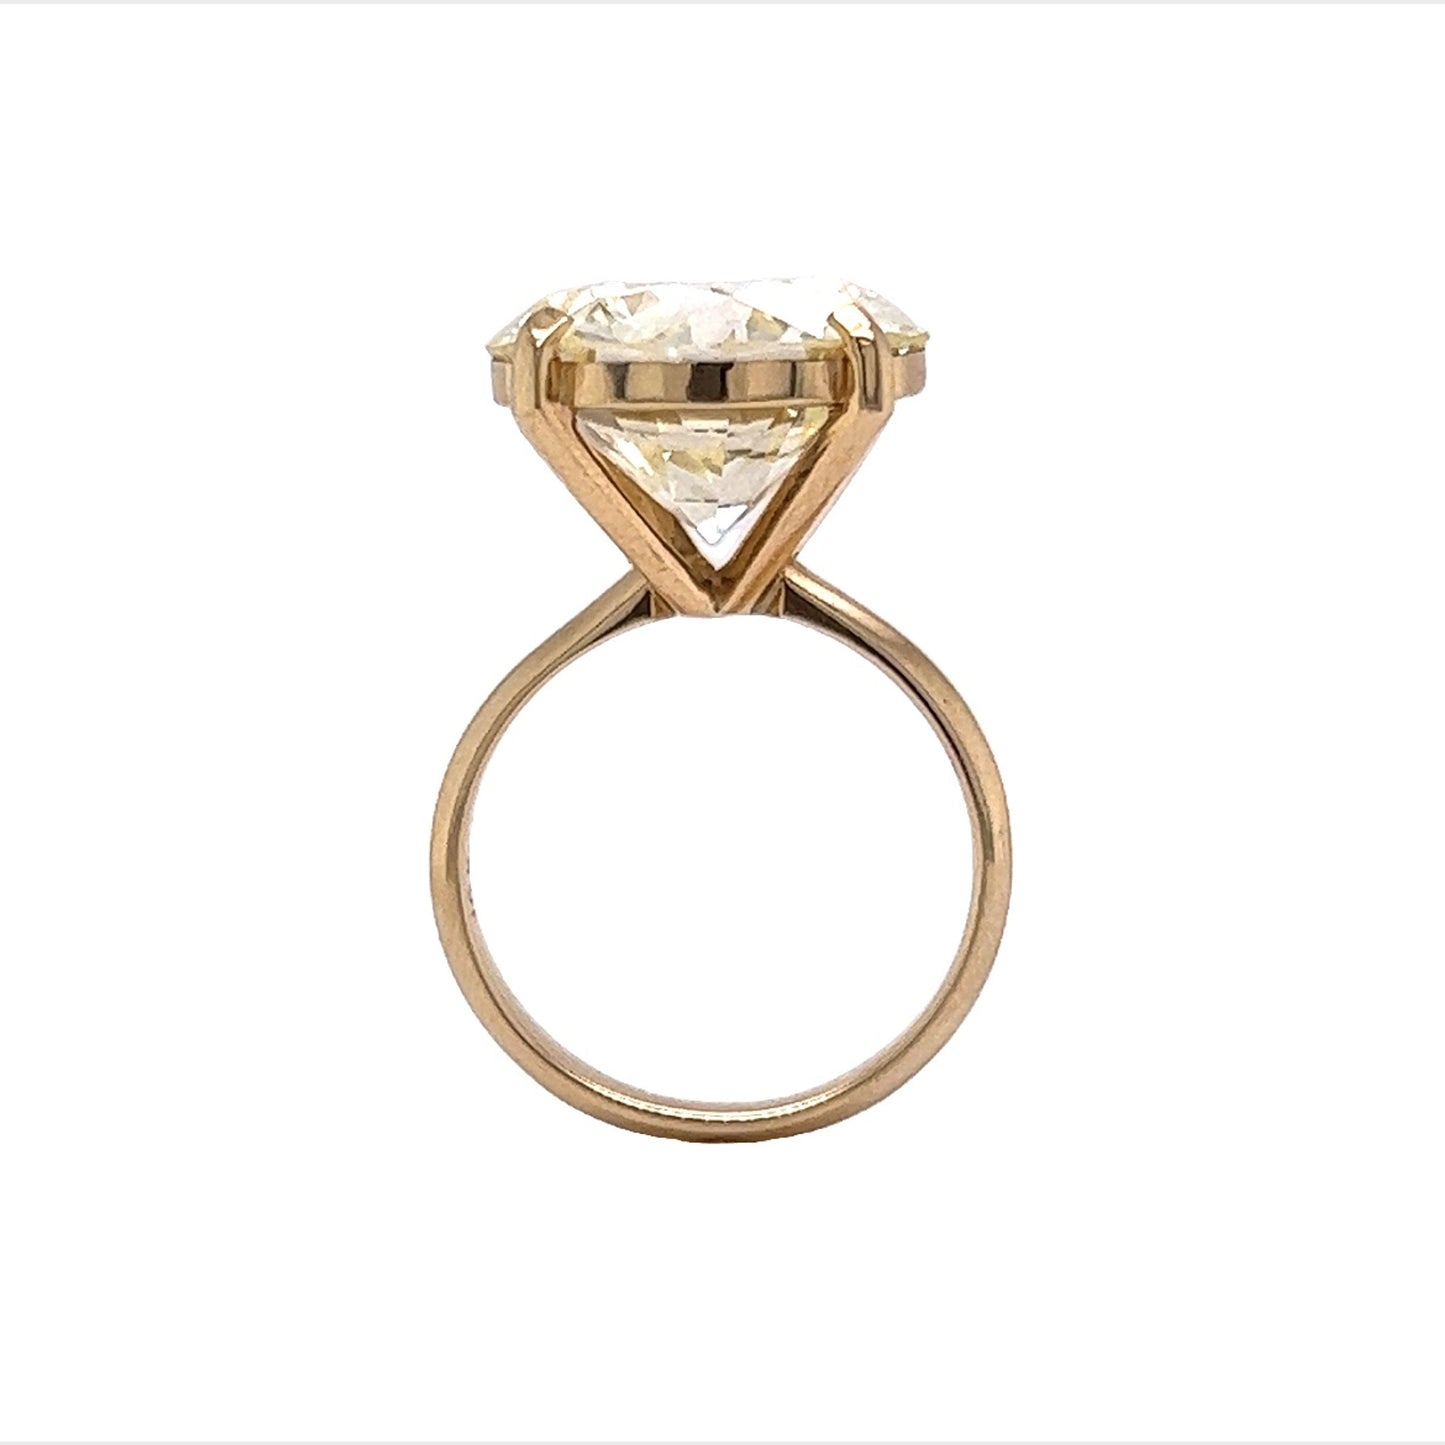 11 Carat Diamond Engagement Ring in 14K Yellow Gold